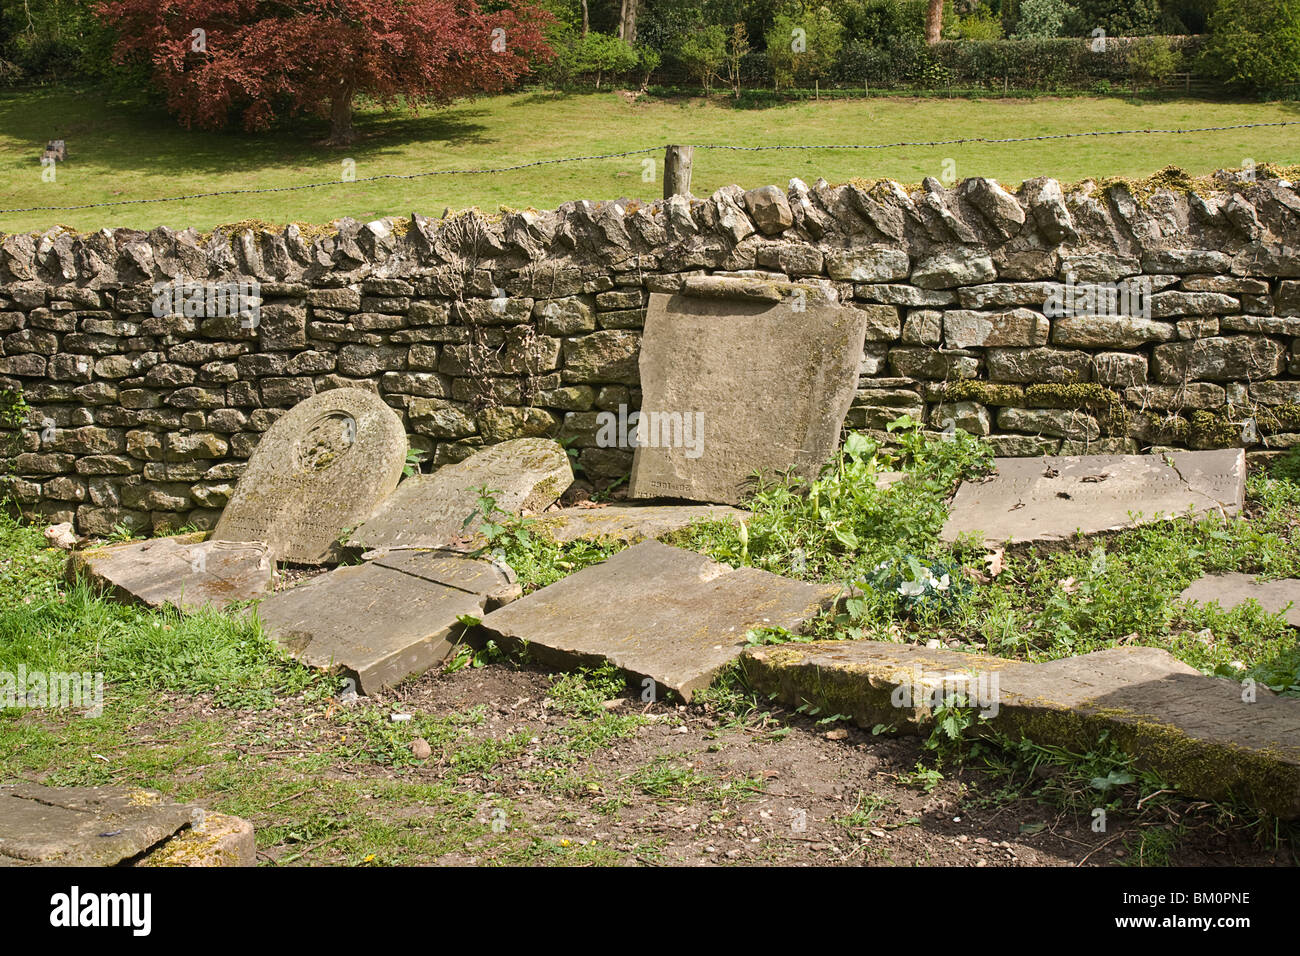 Broken gravestones laid in a corner of a churchyard. Stock Photo